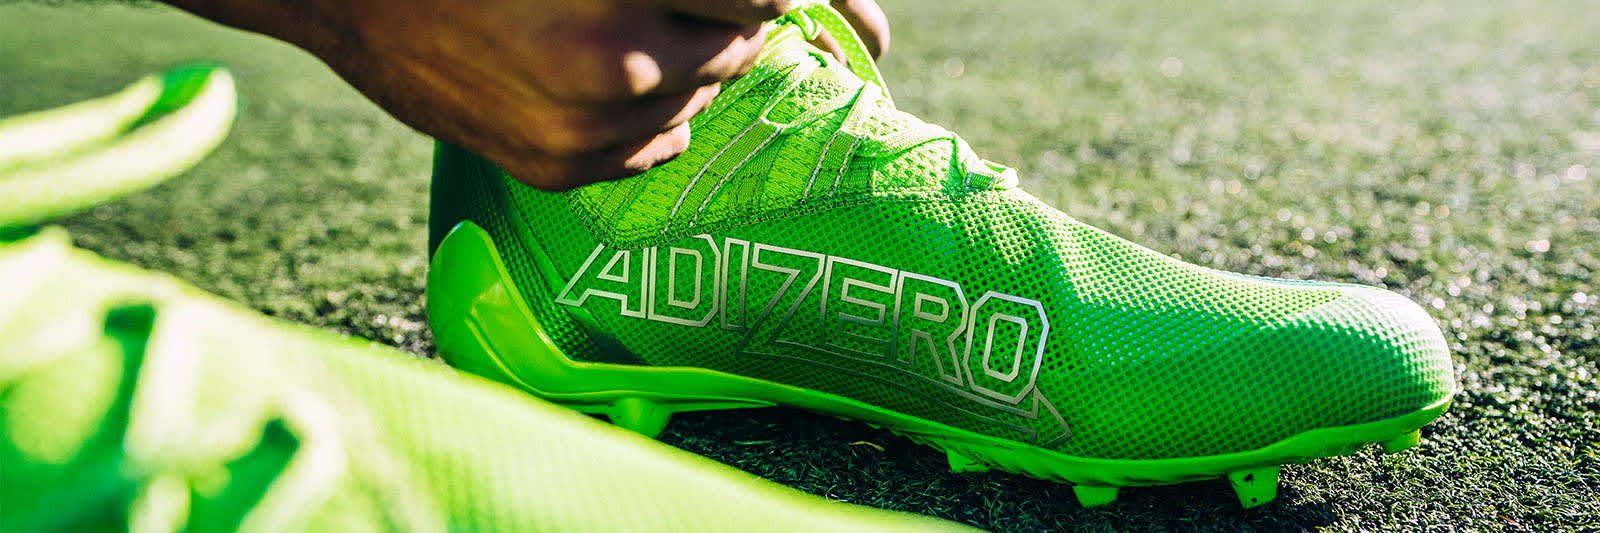 adidas speed football cleats